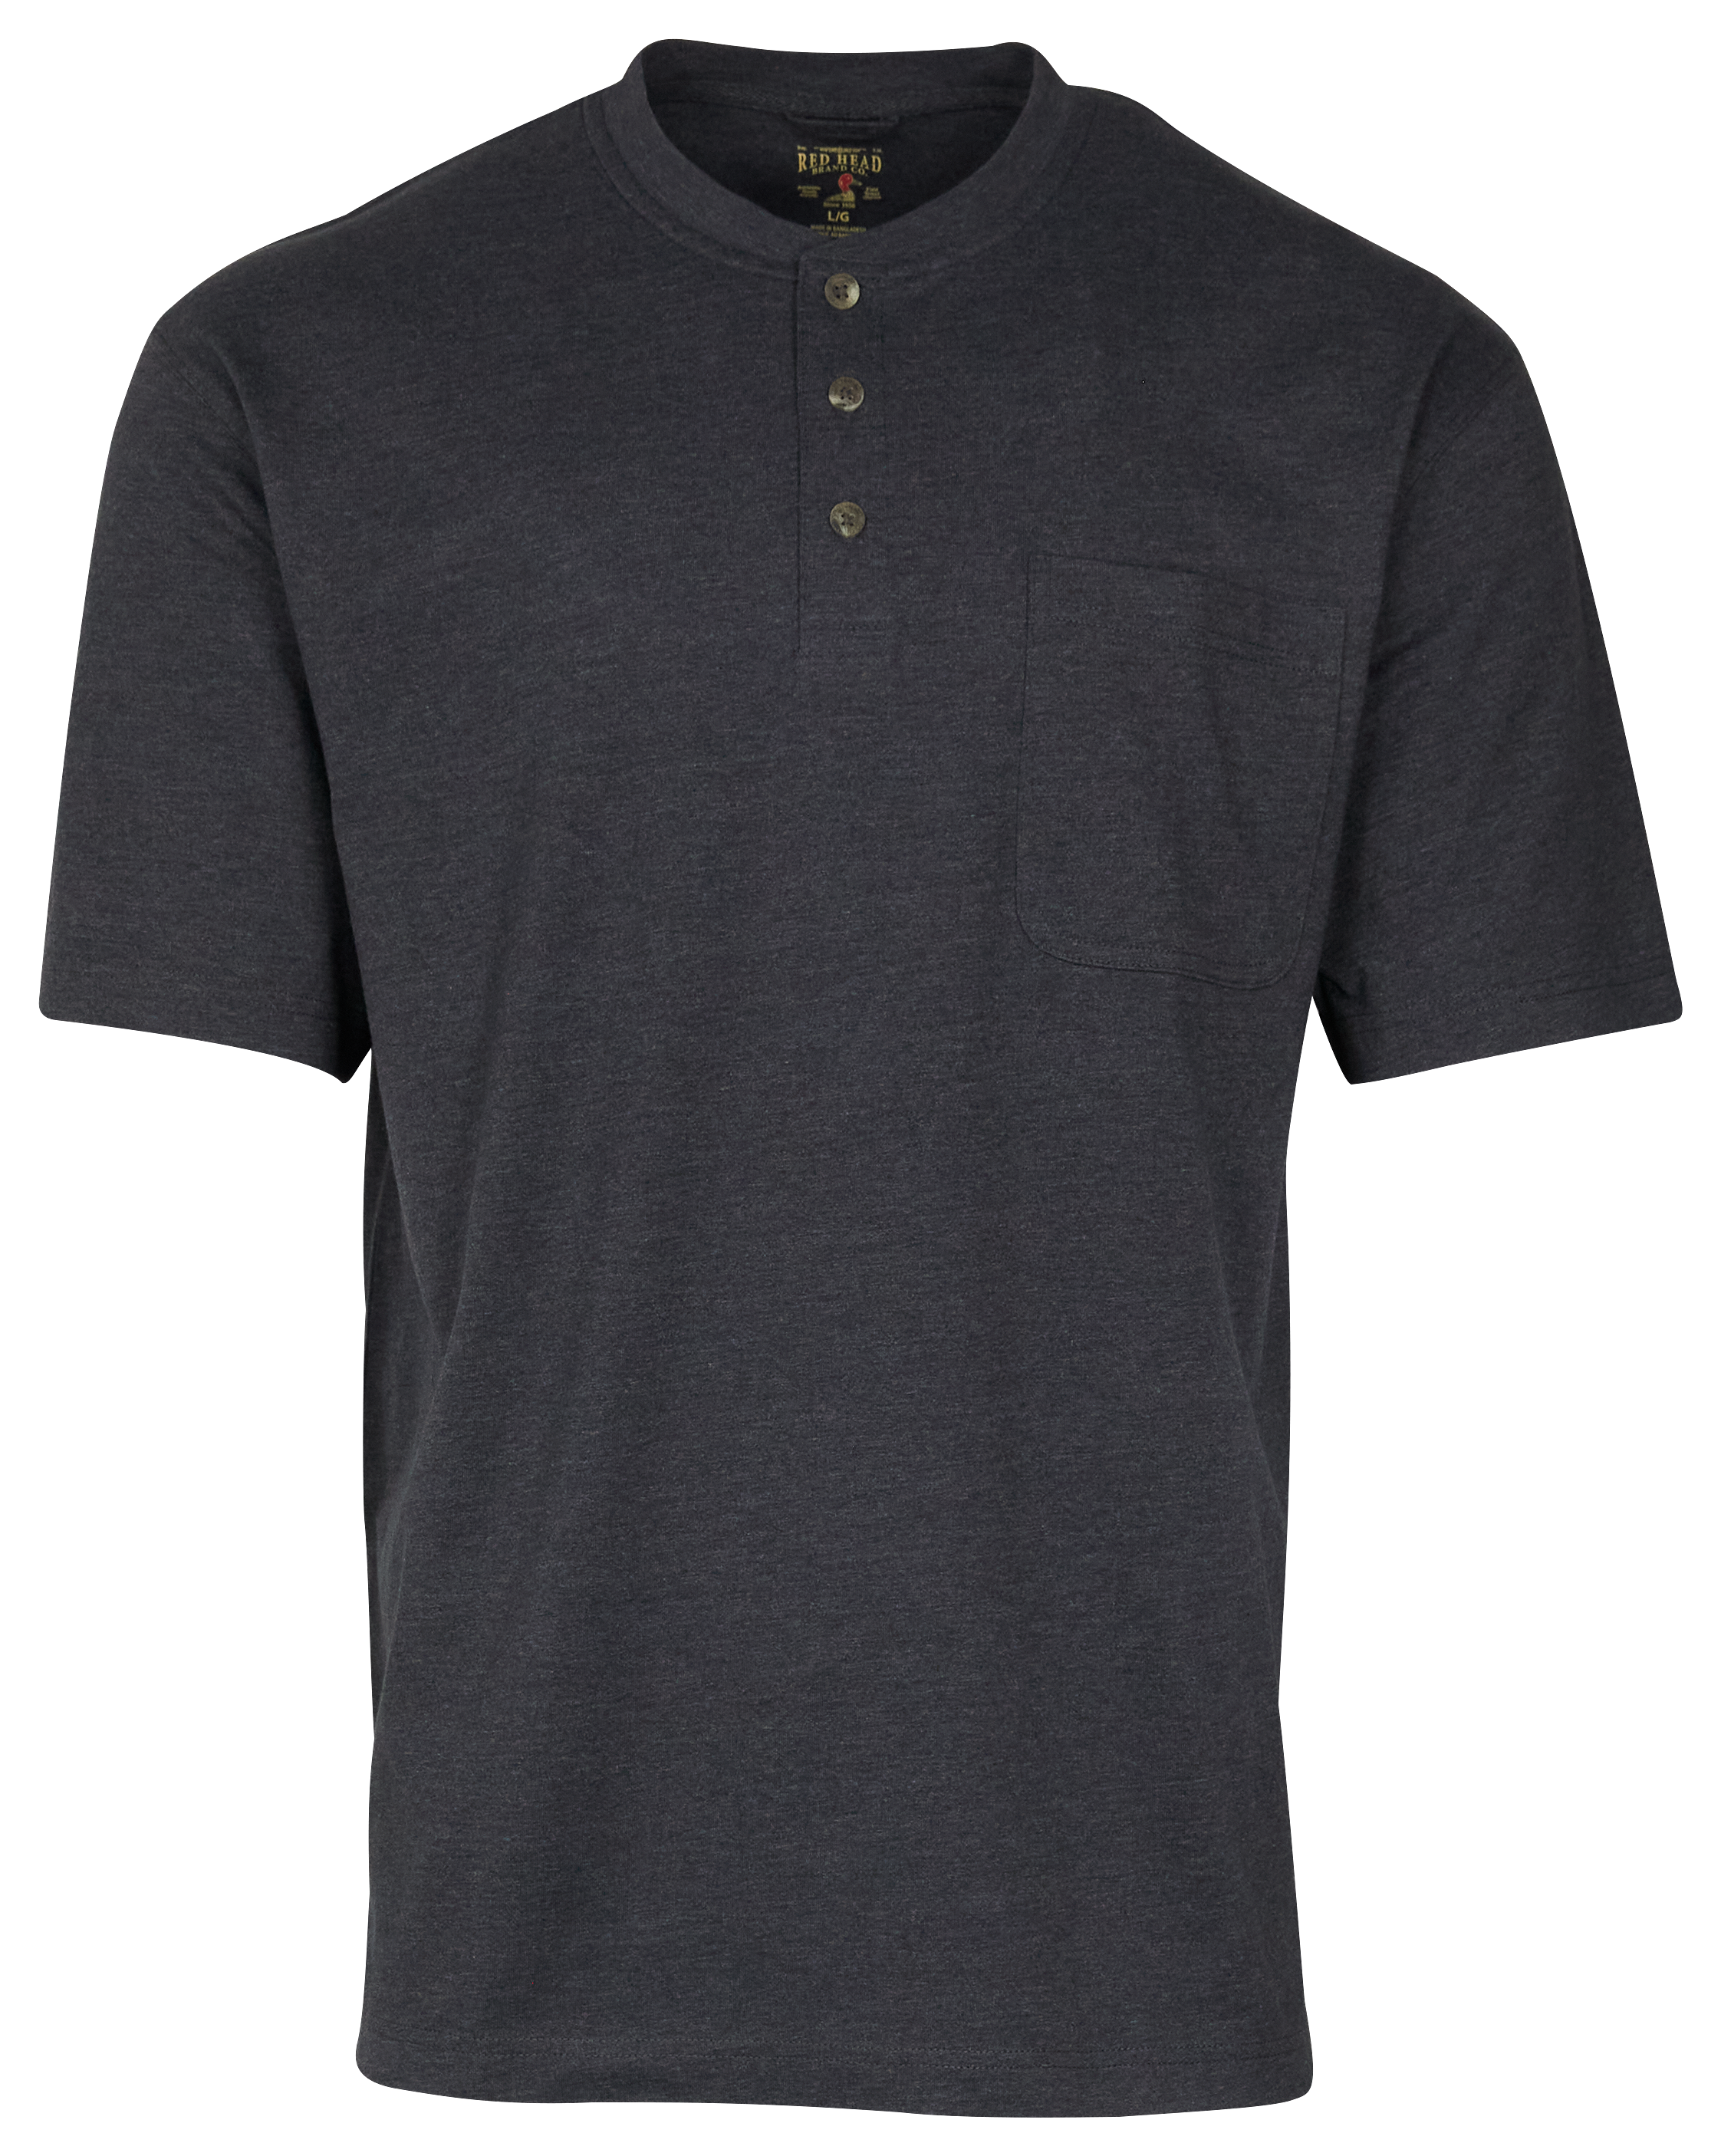 RedHead Henley Pocket Short-Sleeve Shirt for Men - Charcoal Heather - LT